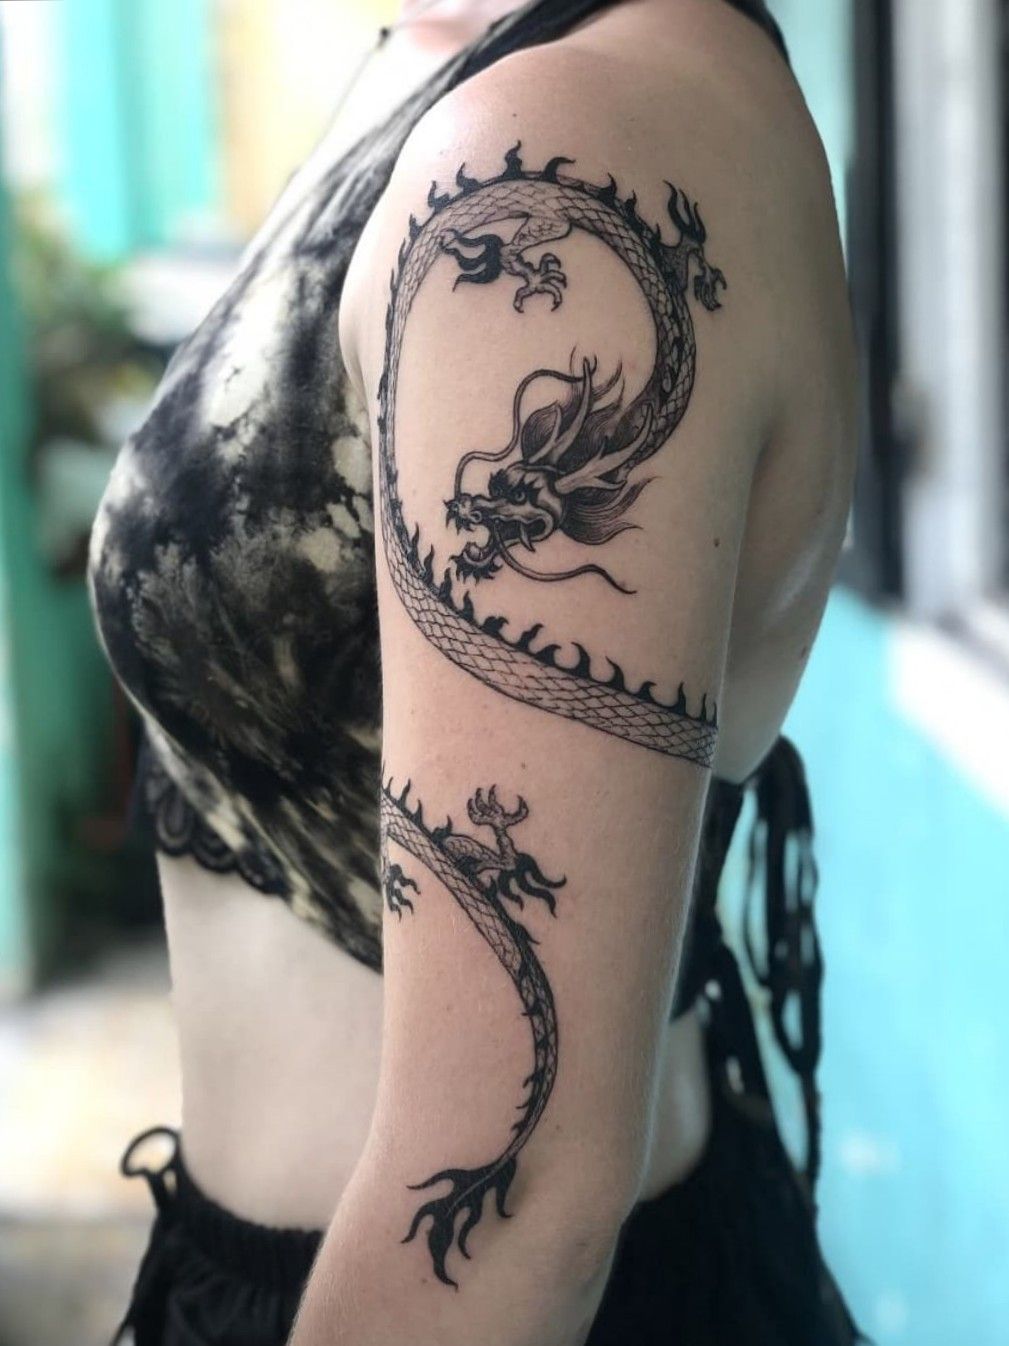 Tattoo uploaded by Killyink • girl with the dragon tattoo • Tattoodo